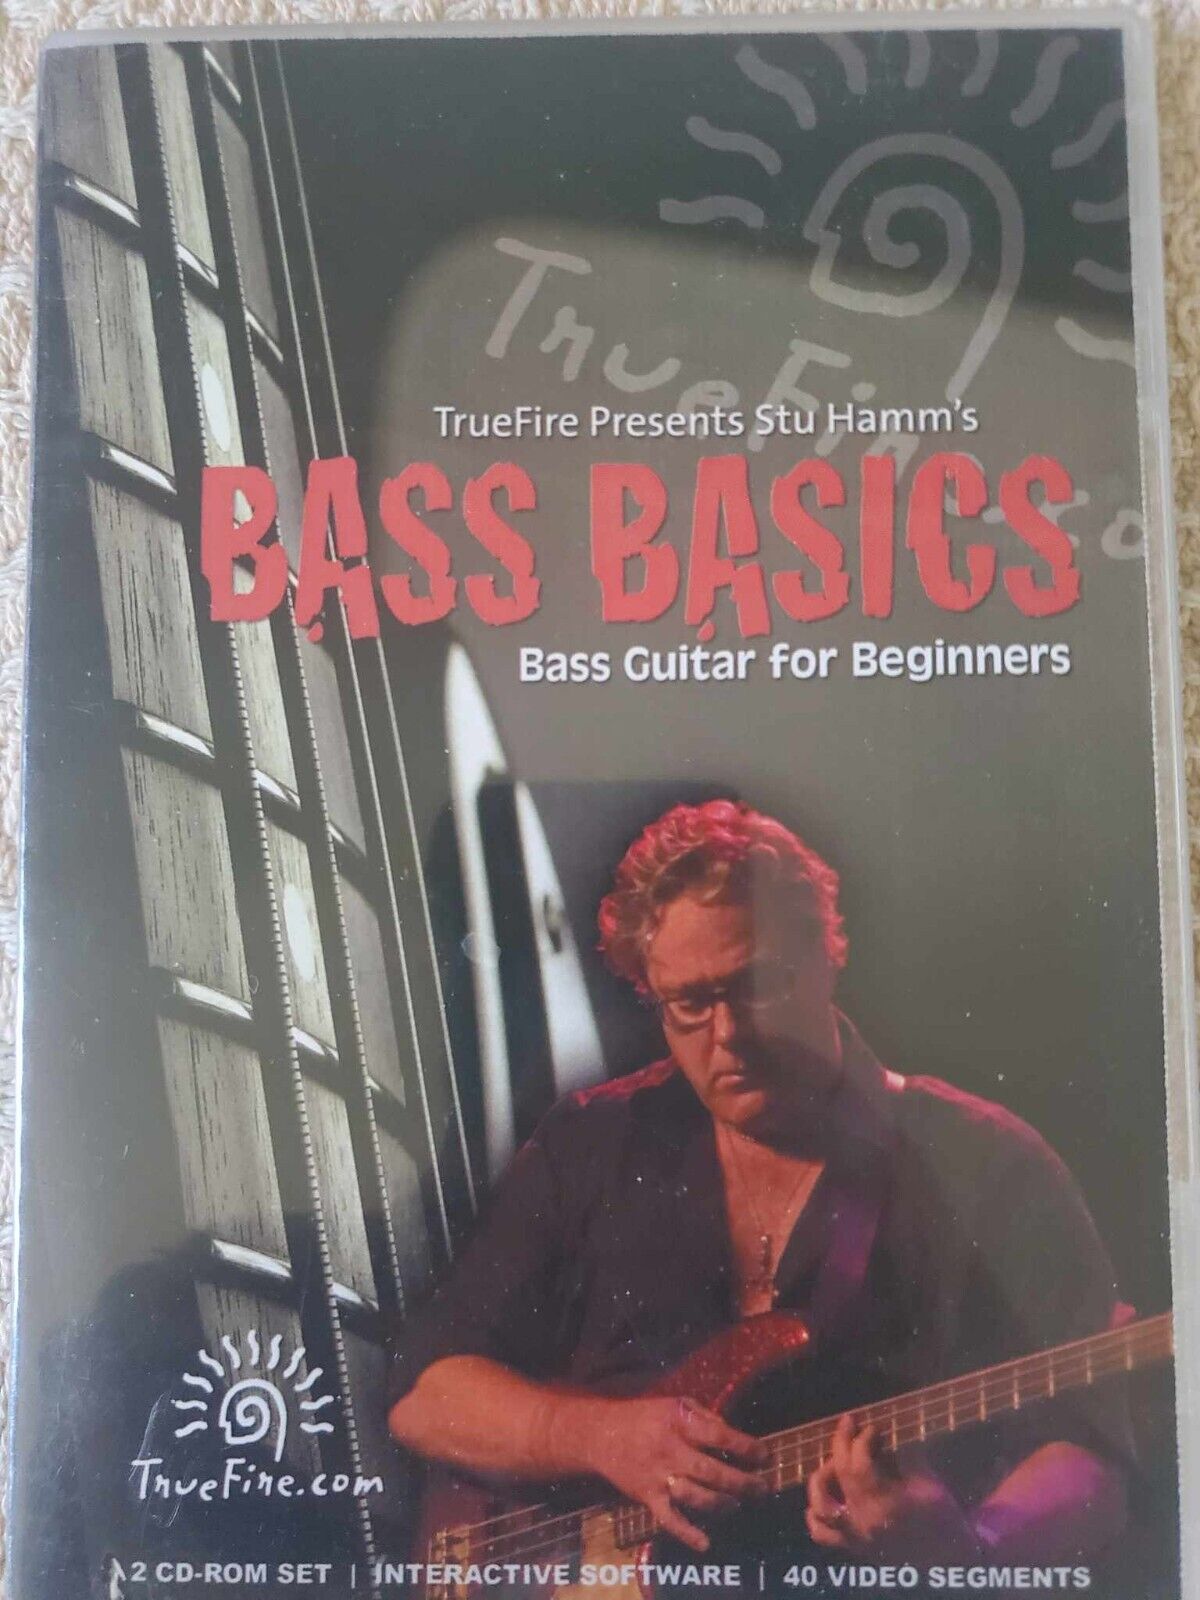 Stuart Hamm's Bass Basics - Bass Guitar Lessons for Beginners (2 CD-ROM Set)